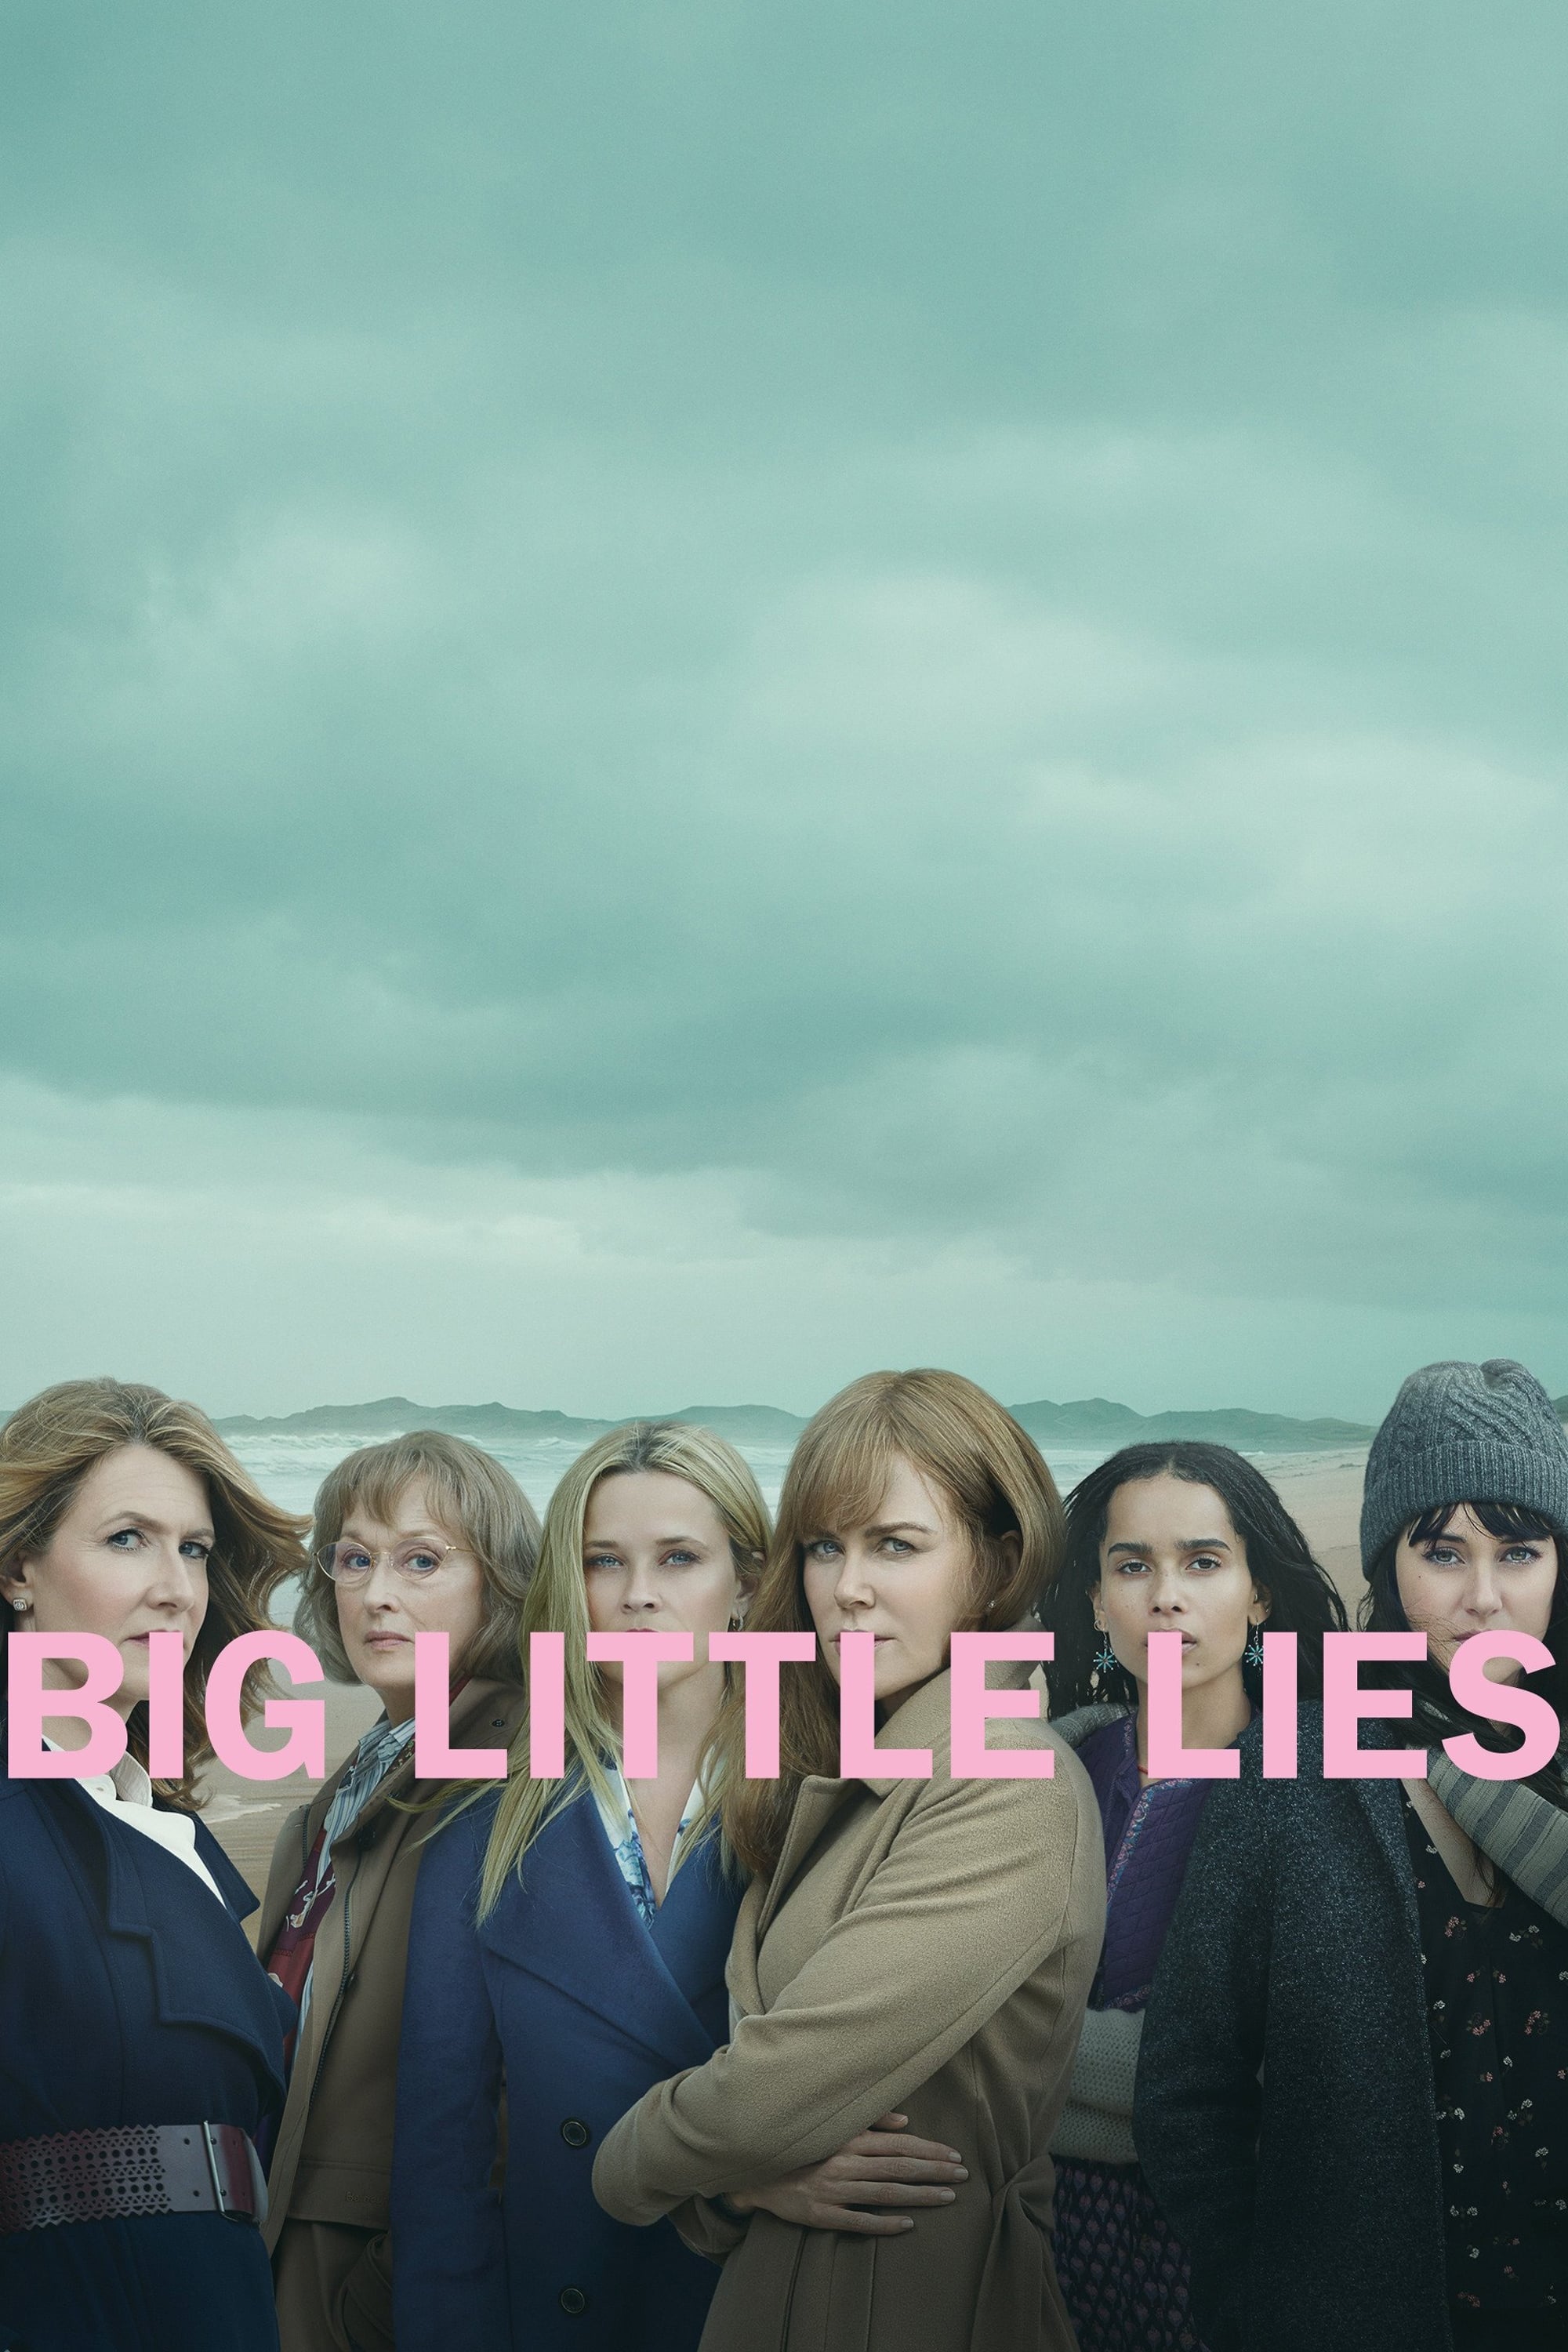 Big Little Lies TV Shows About Domestic Violence